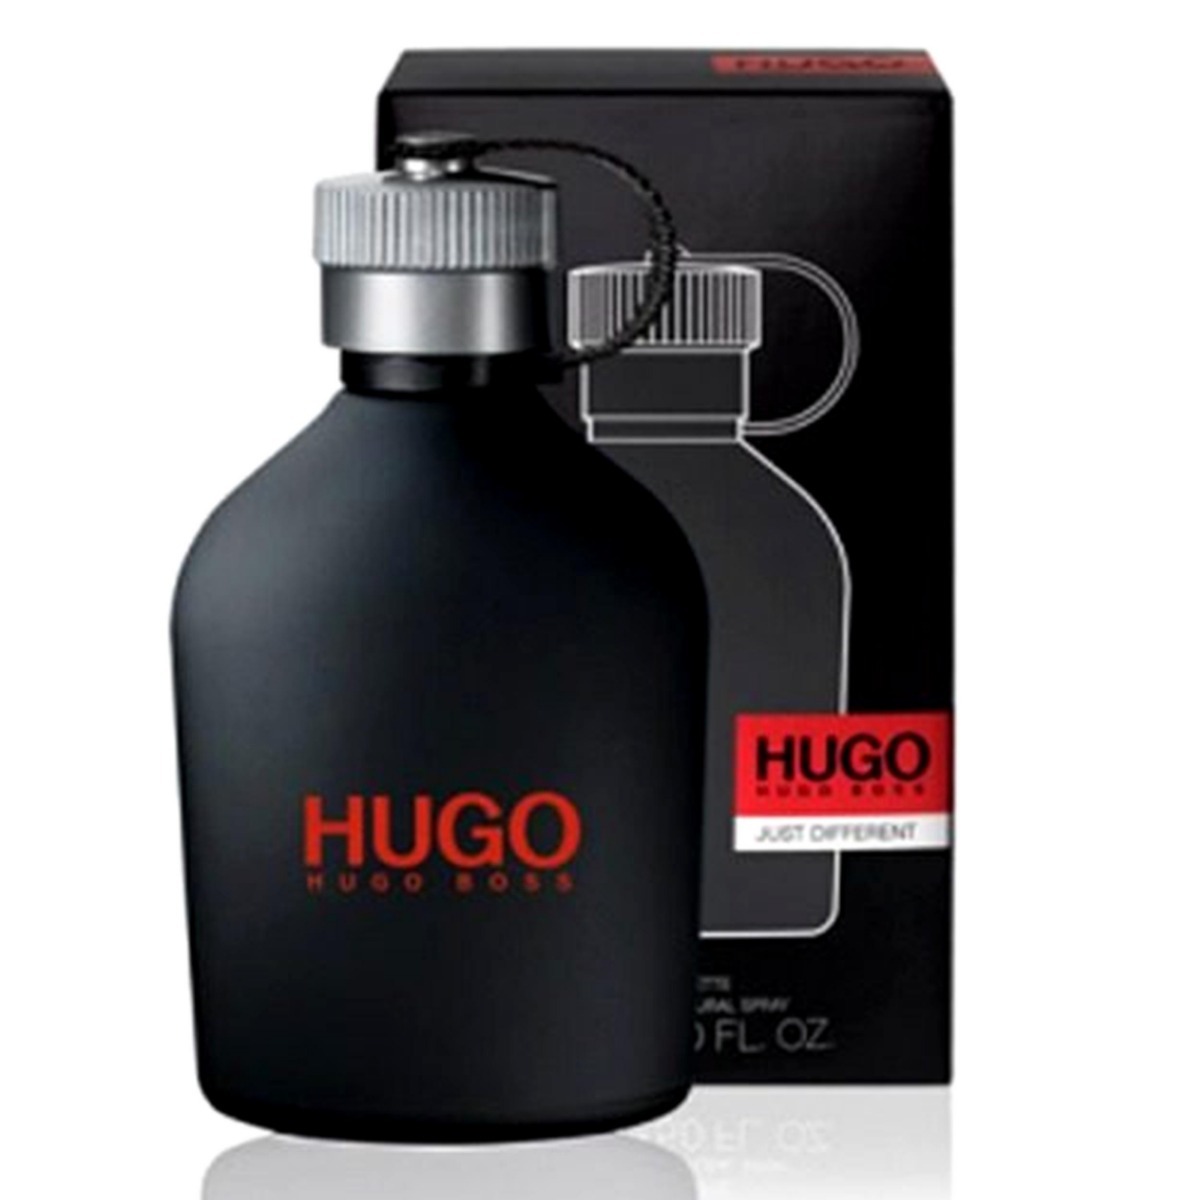 Туалетная вода хуго босс цена. Hugo Boss just different 75мл. Hugo Boss just different 150 мл. Hugo "Hugo Boss just different" 100 ml. Hugo Boss Hugo Boss Hugo man туалетная вода 100.